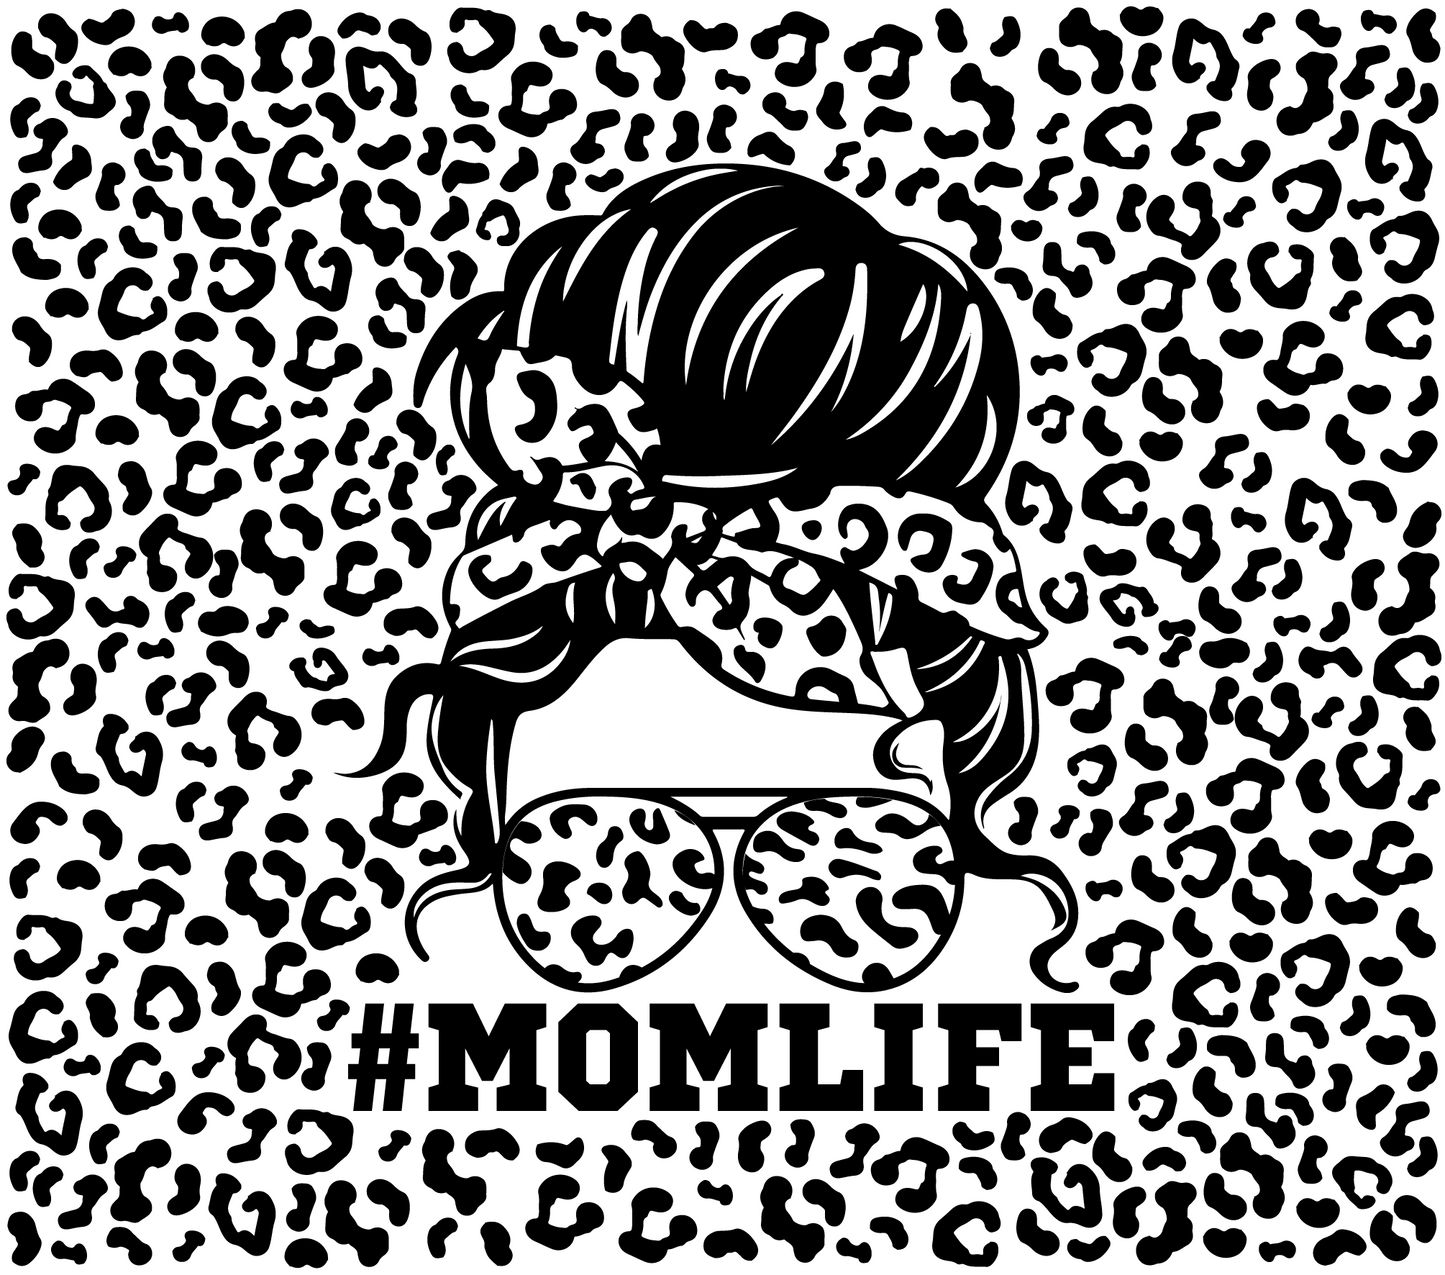 #Mom Life - Leopard Print - 20 Oz Sublimation Transfer